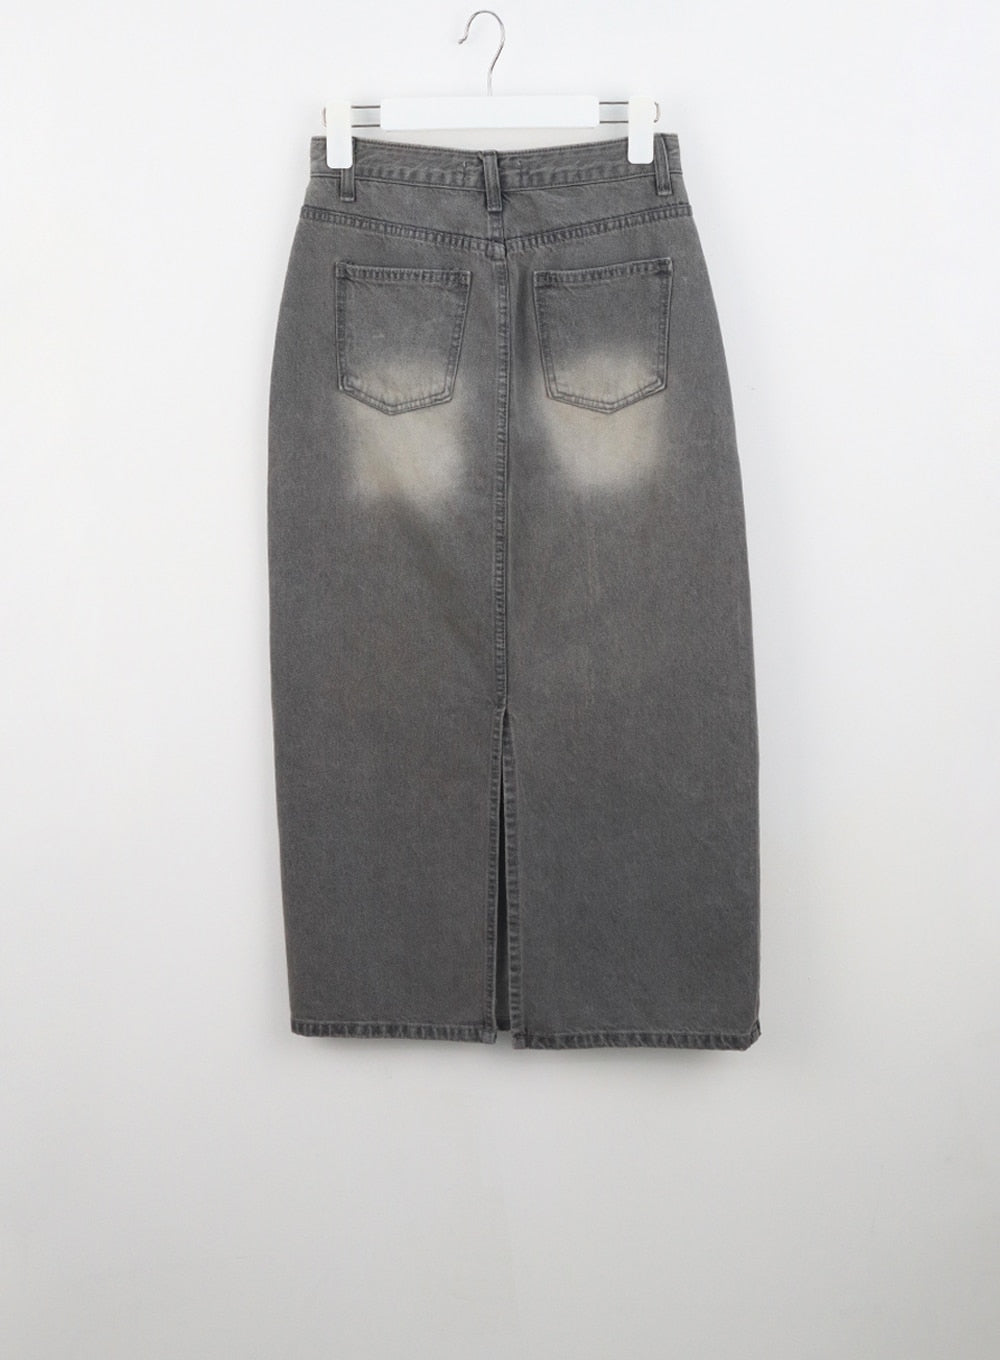 Grey Denim Maxi Skirt IU329